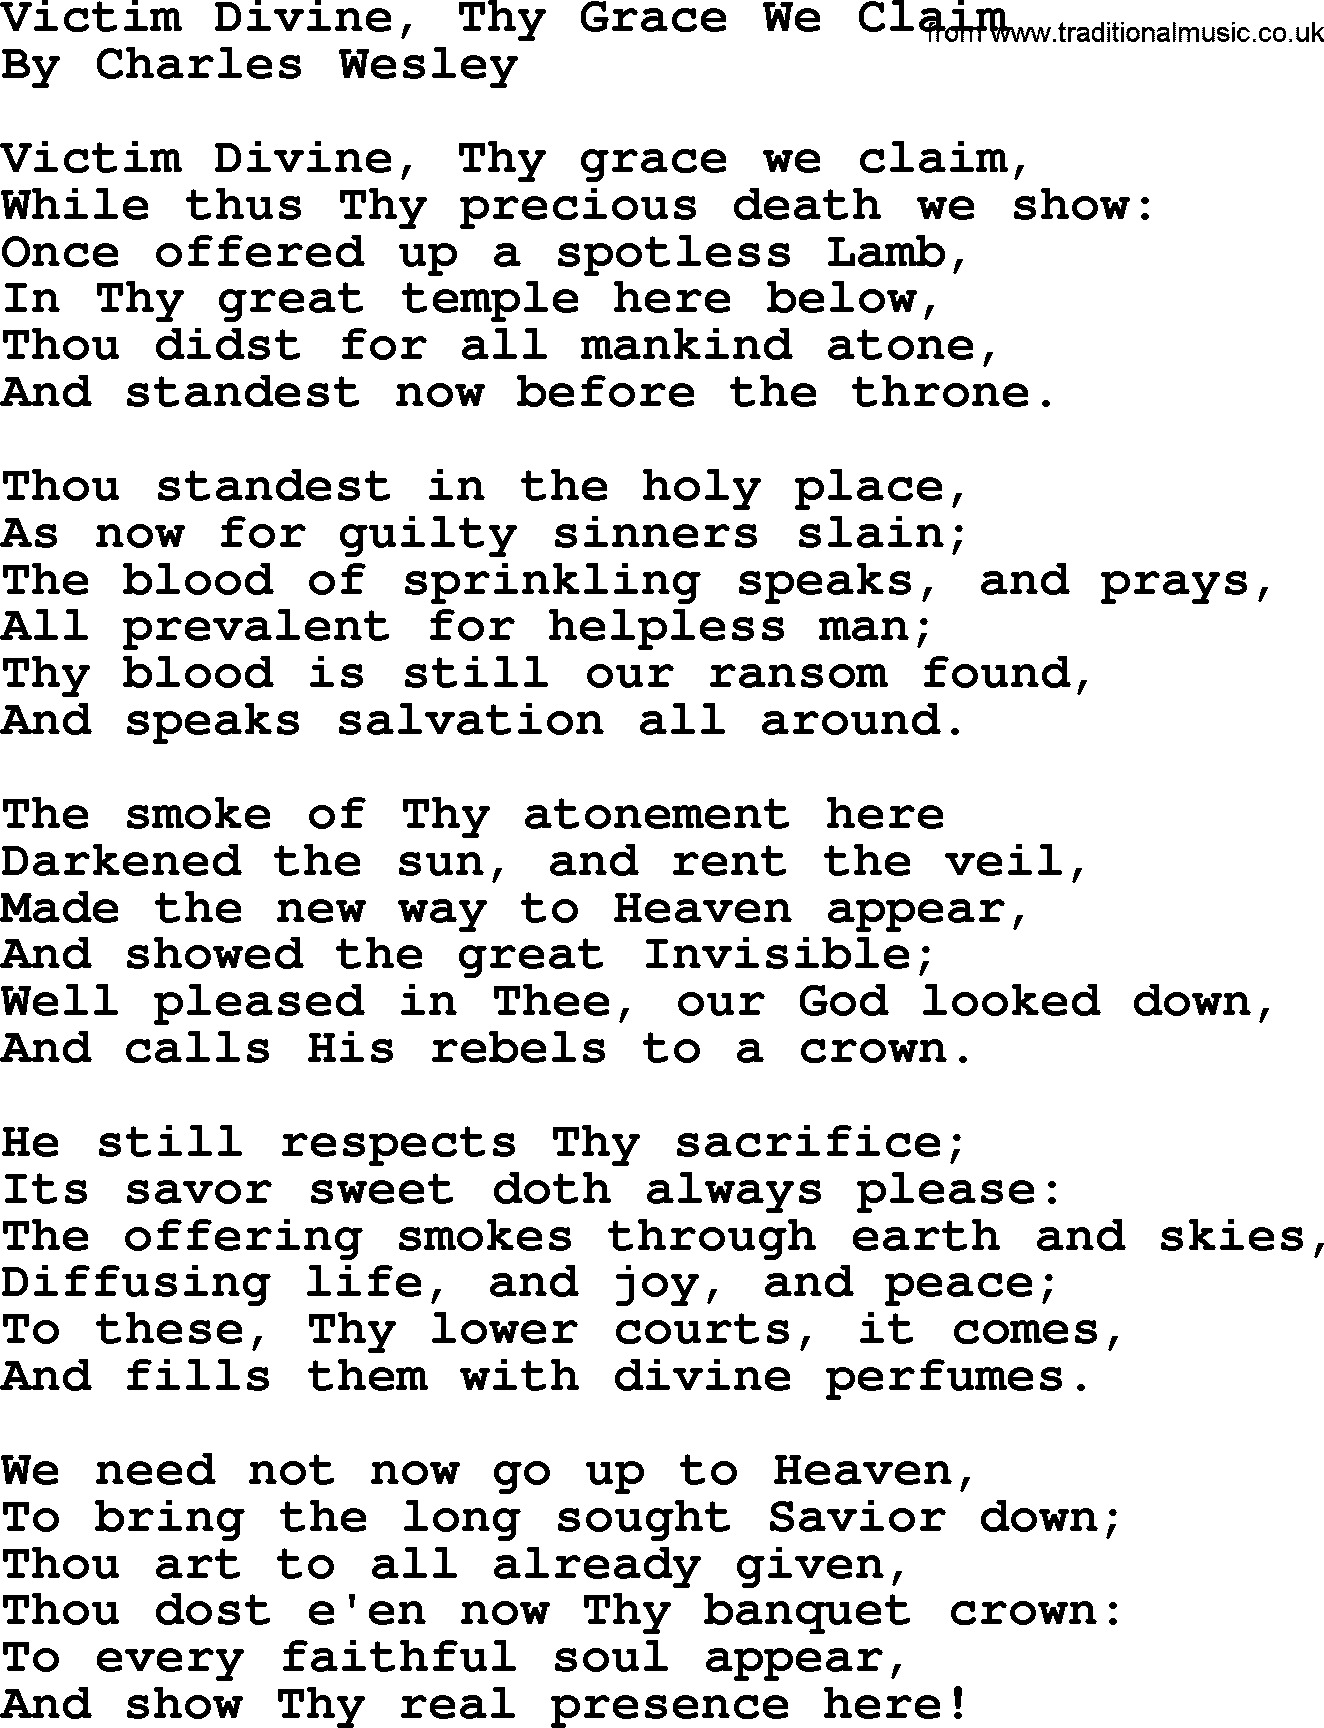 Charles Wesley hymn: Victim Divine, Thy Grace We Claim, lyrics